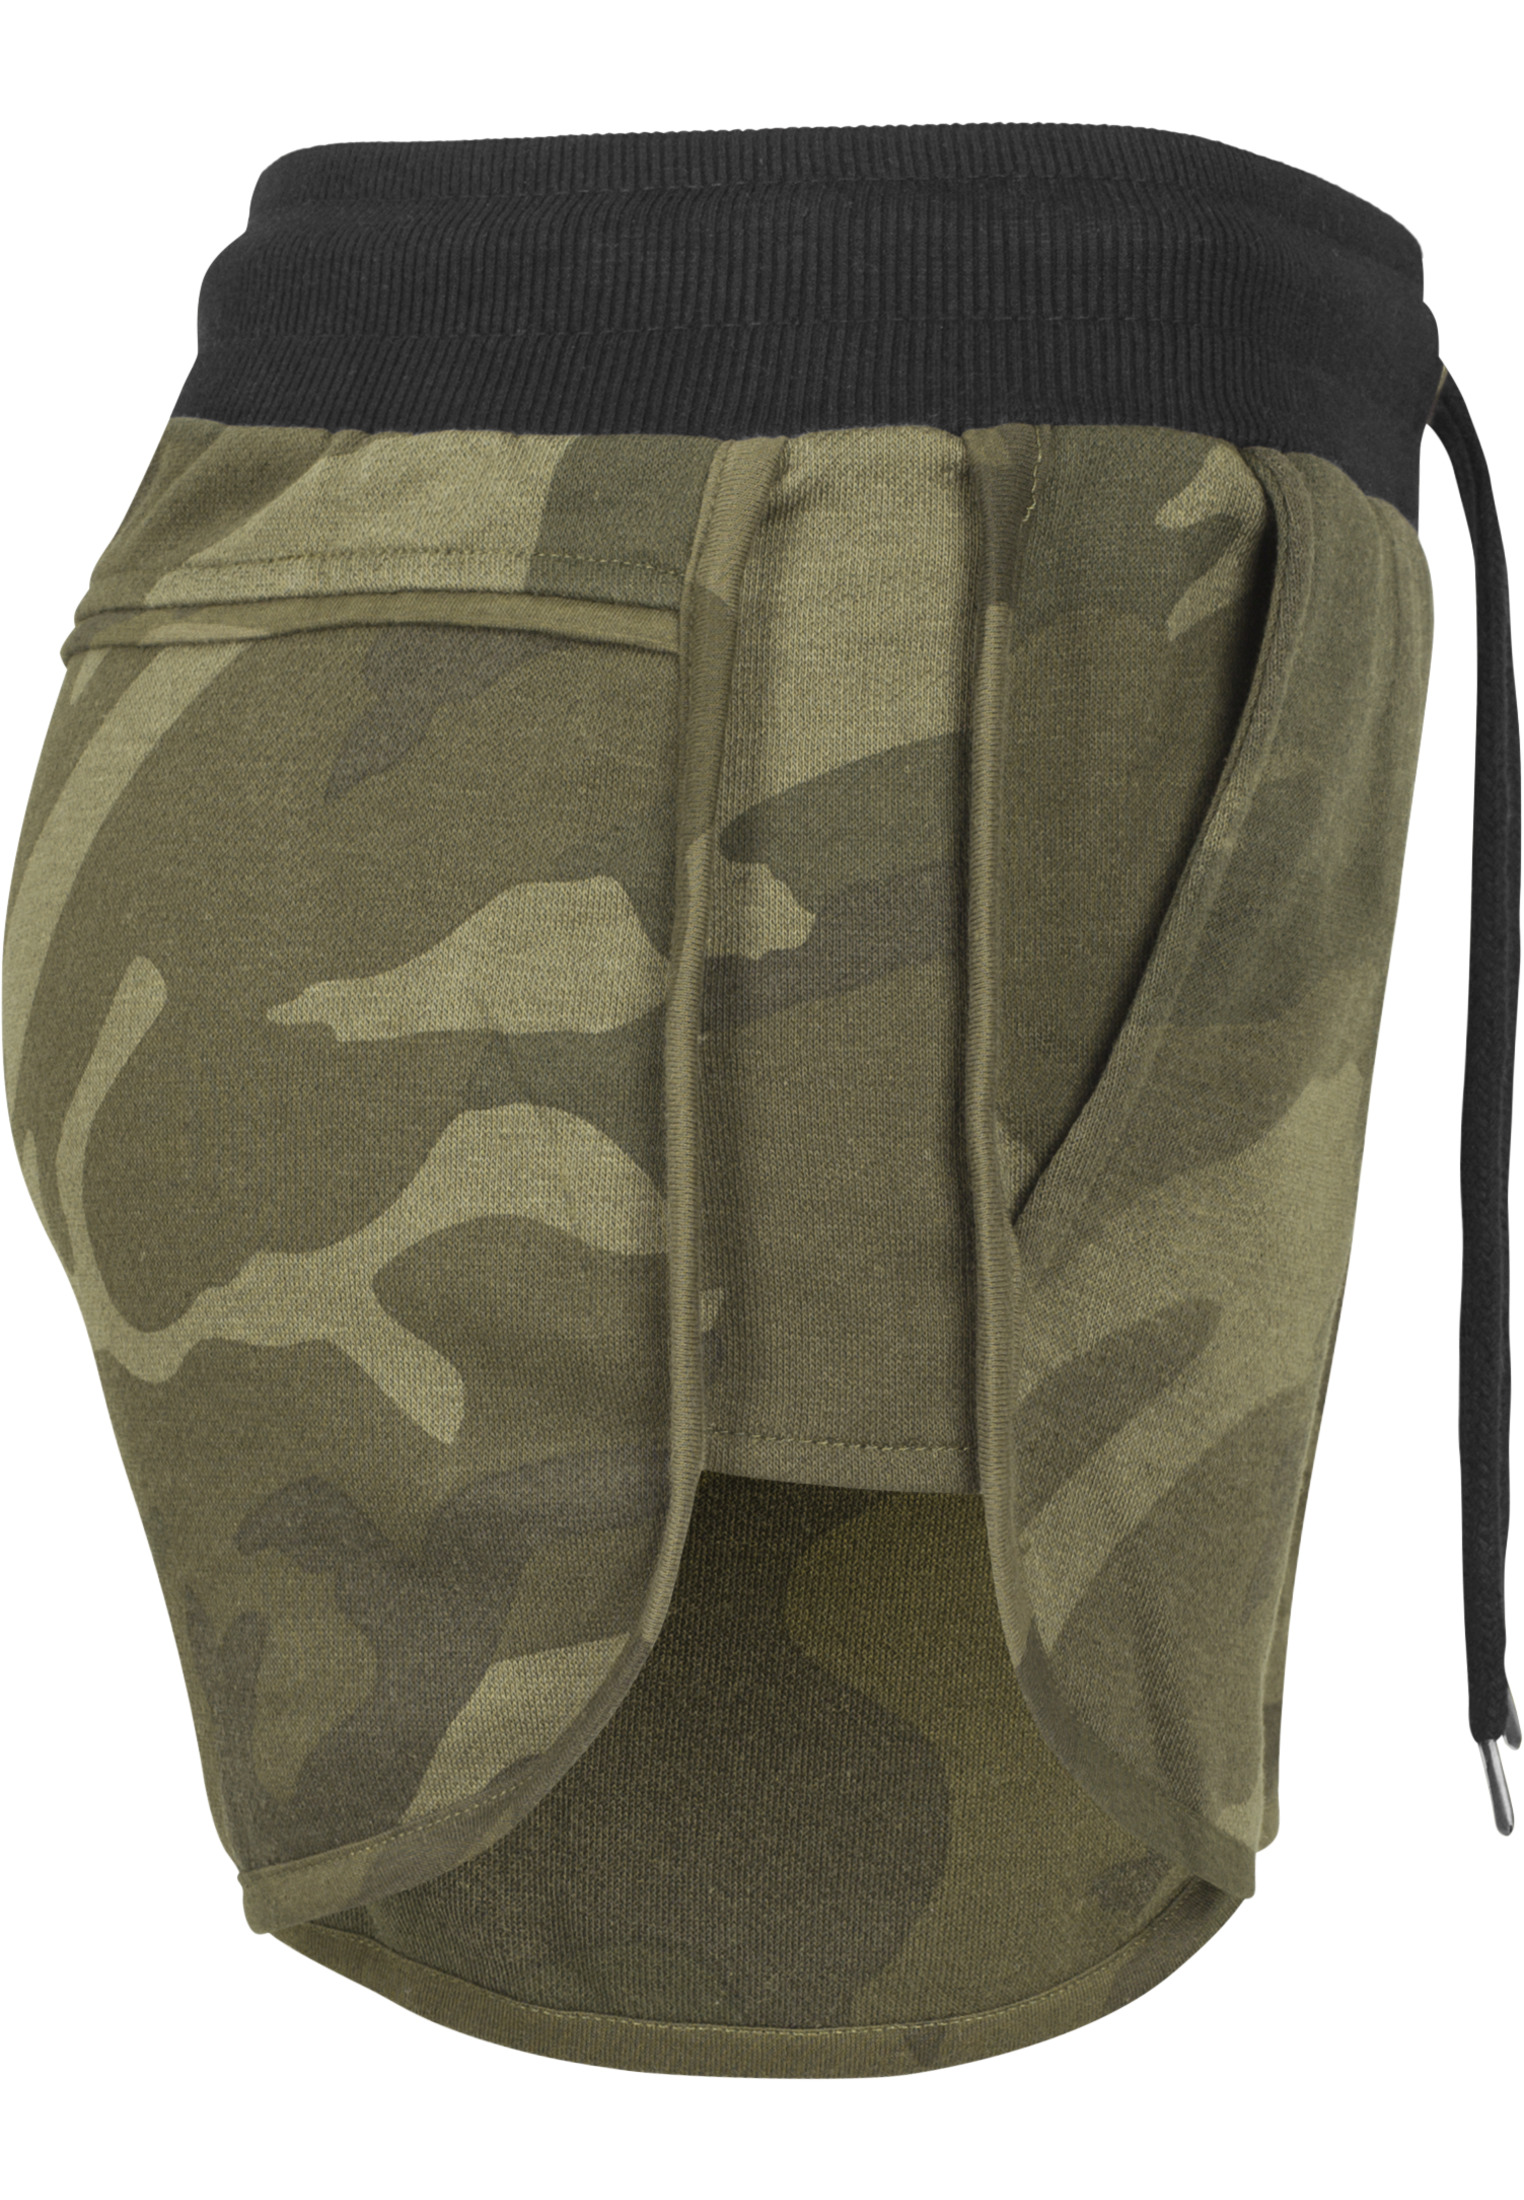 Kurze Hosen Ladies Camo Hotpants in Farbe olive camo/blk